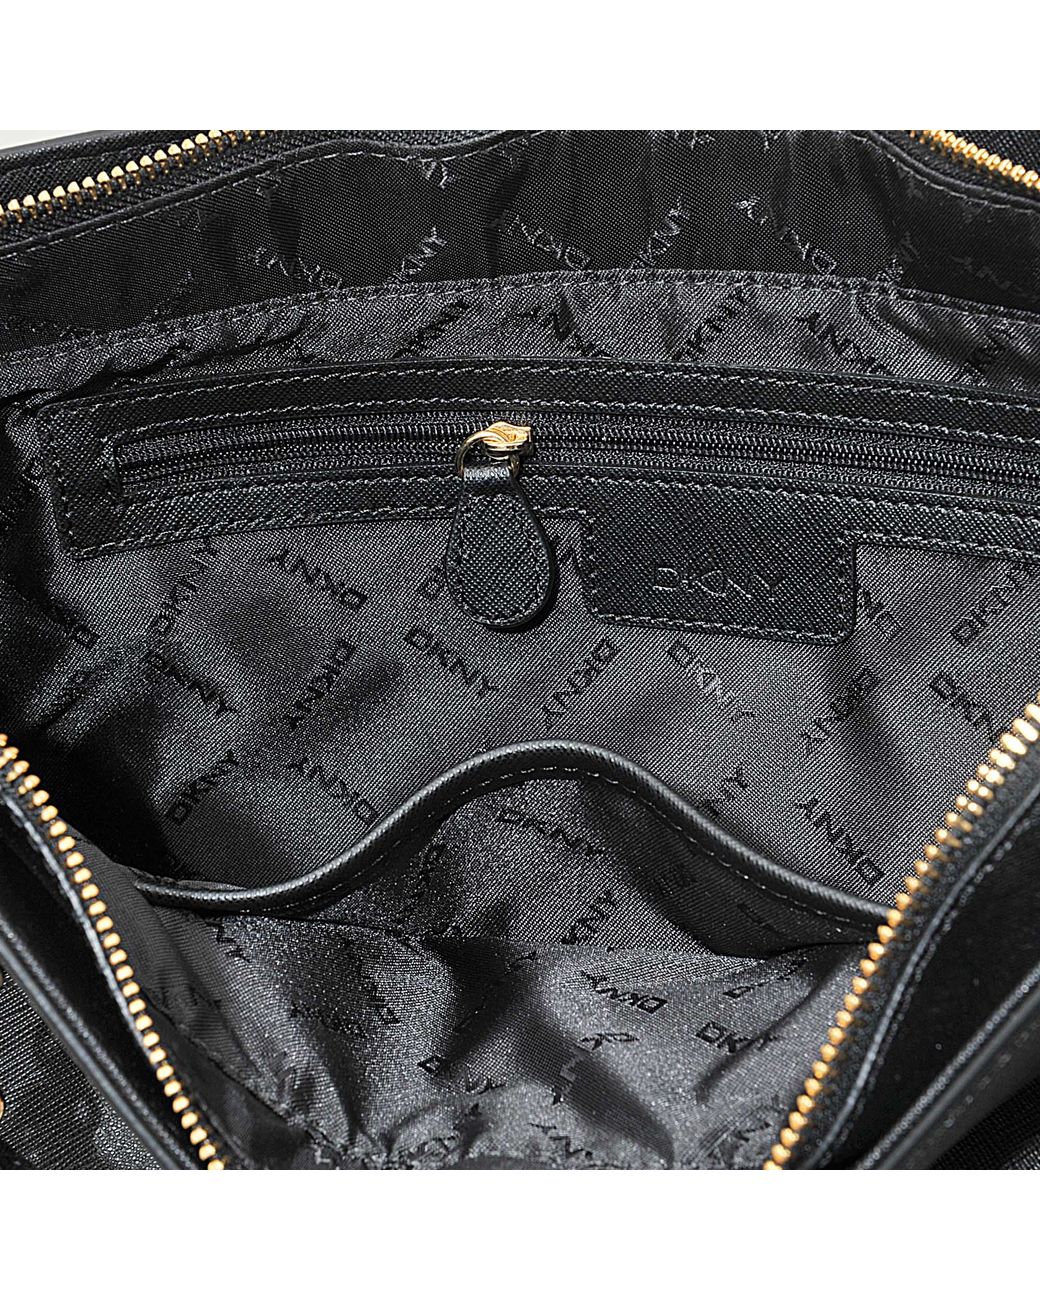 DKNY Bryant Park - Saffiano Leather Large Double Zip Shopper w/ Det SS  SKU:8513959 